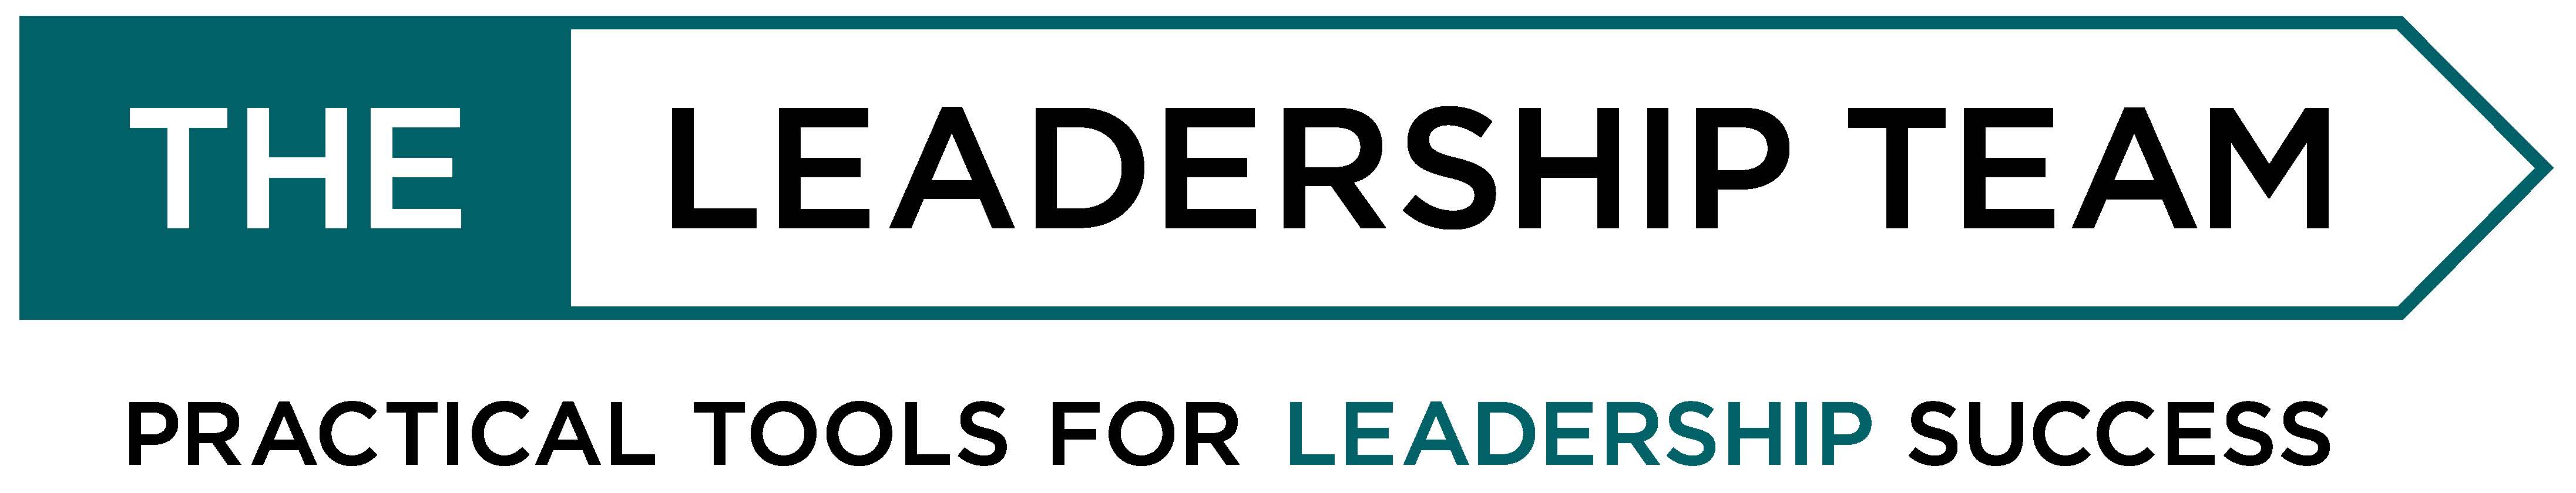 The Leadership Team Corporate Logo